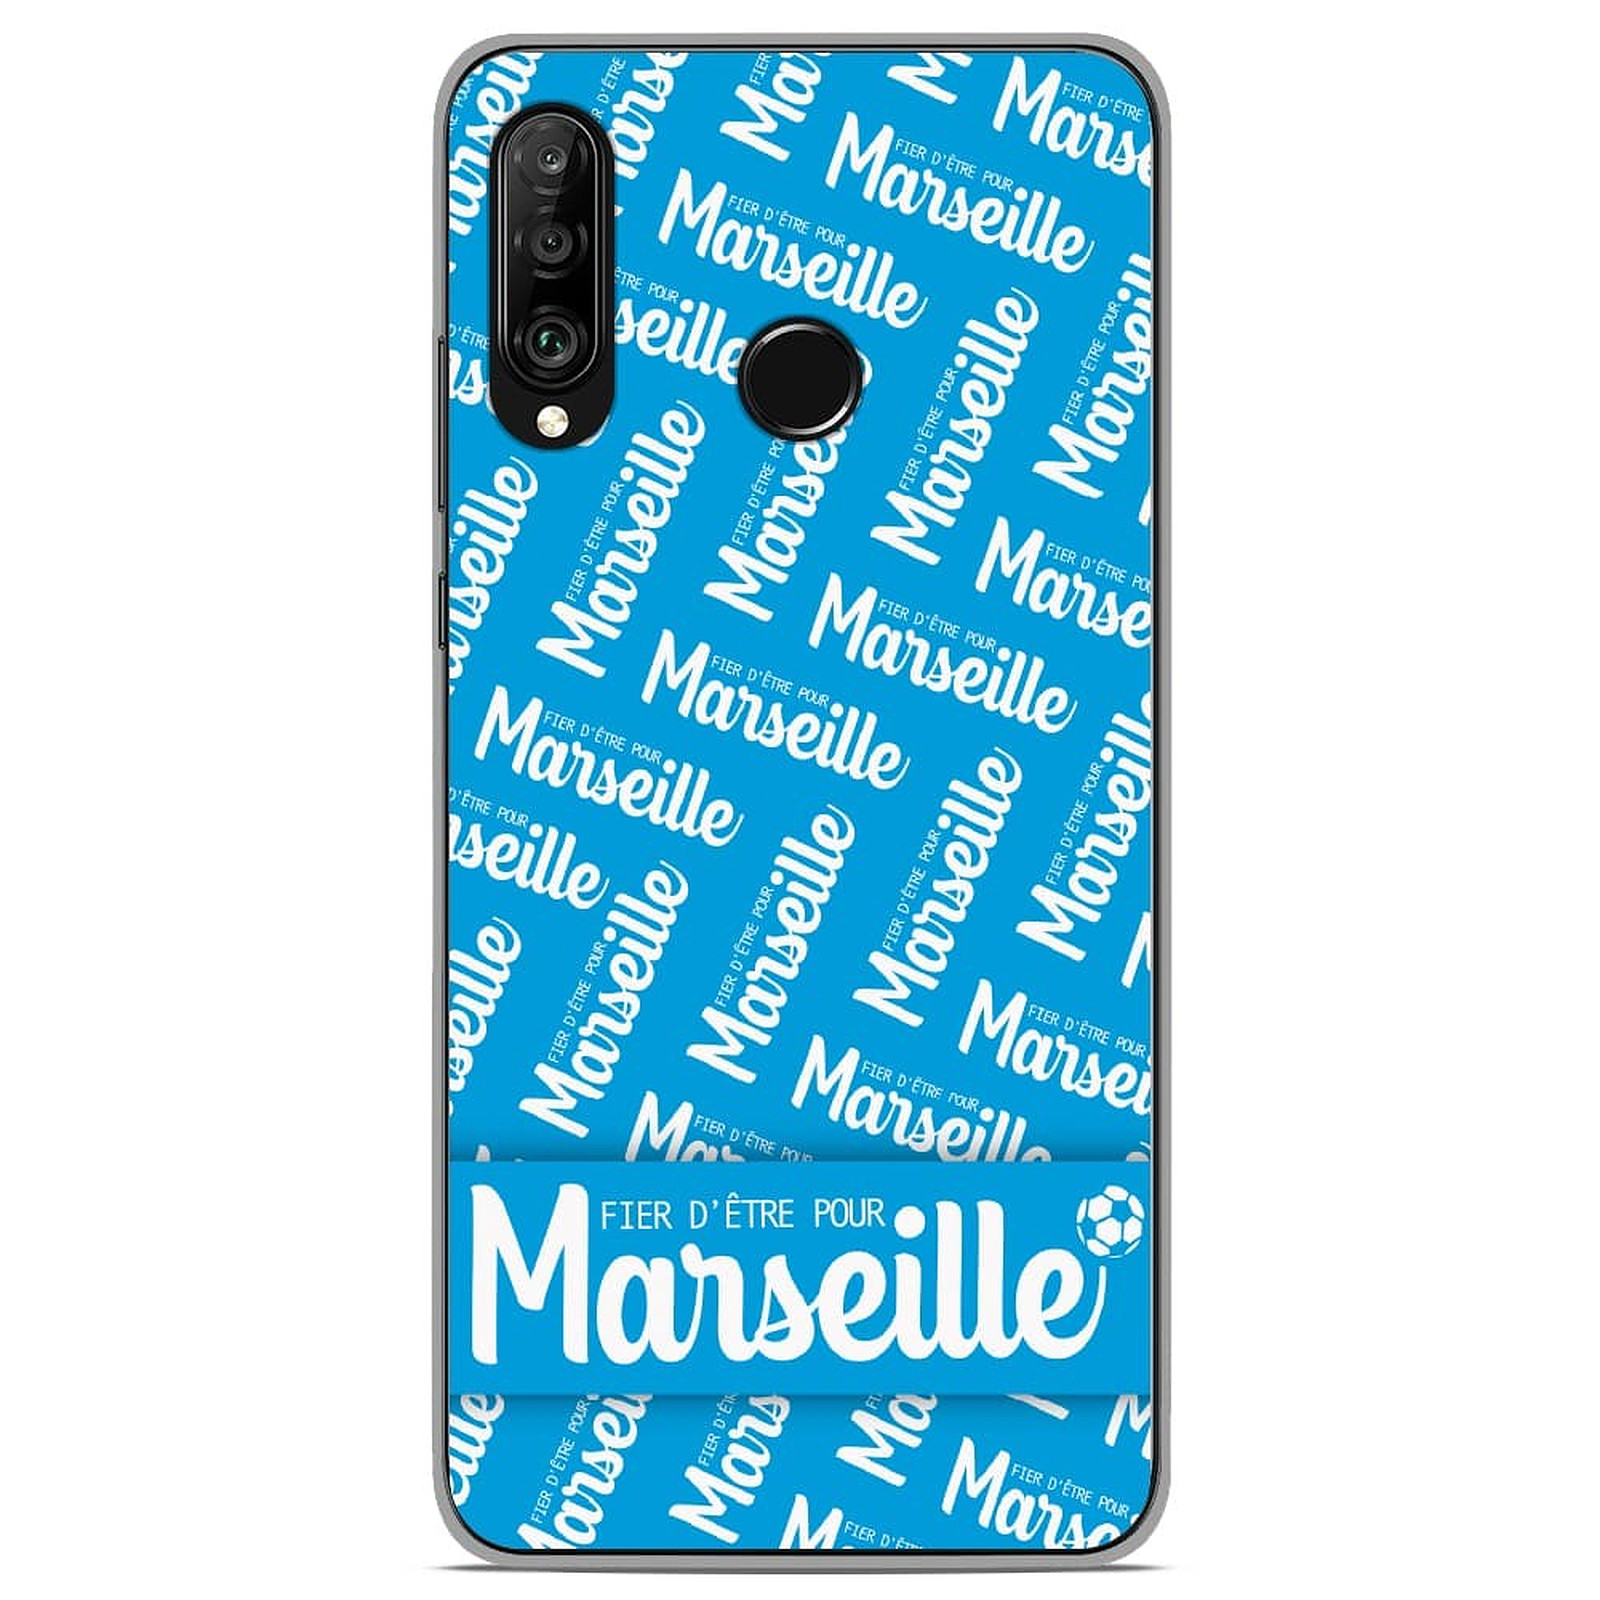 1001 Coques Coque silicone gel Huawei P30 Lite motif Fier d'etre pour Marseille - Coque telephone 1001Coques